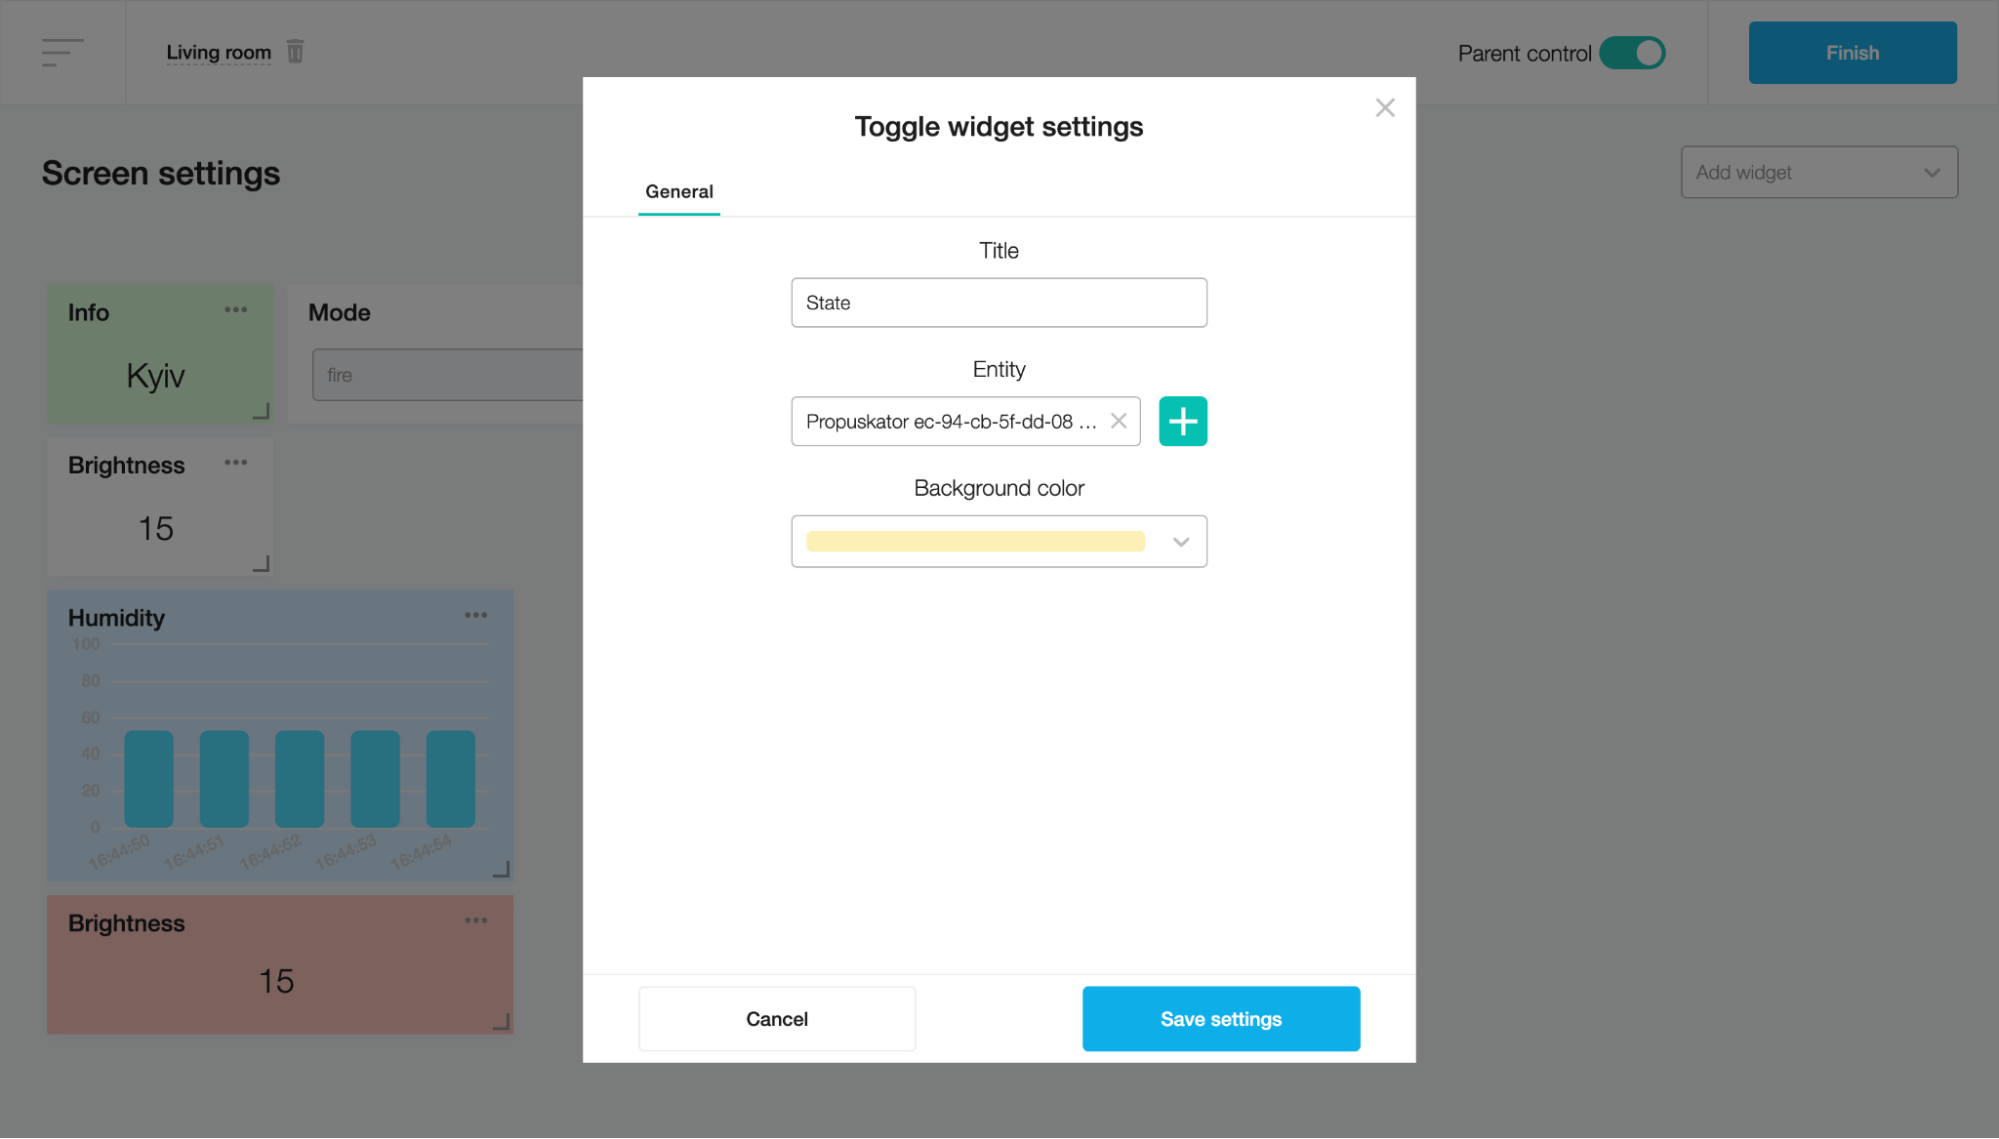 Toggle widget settings